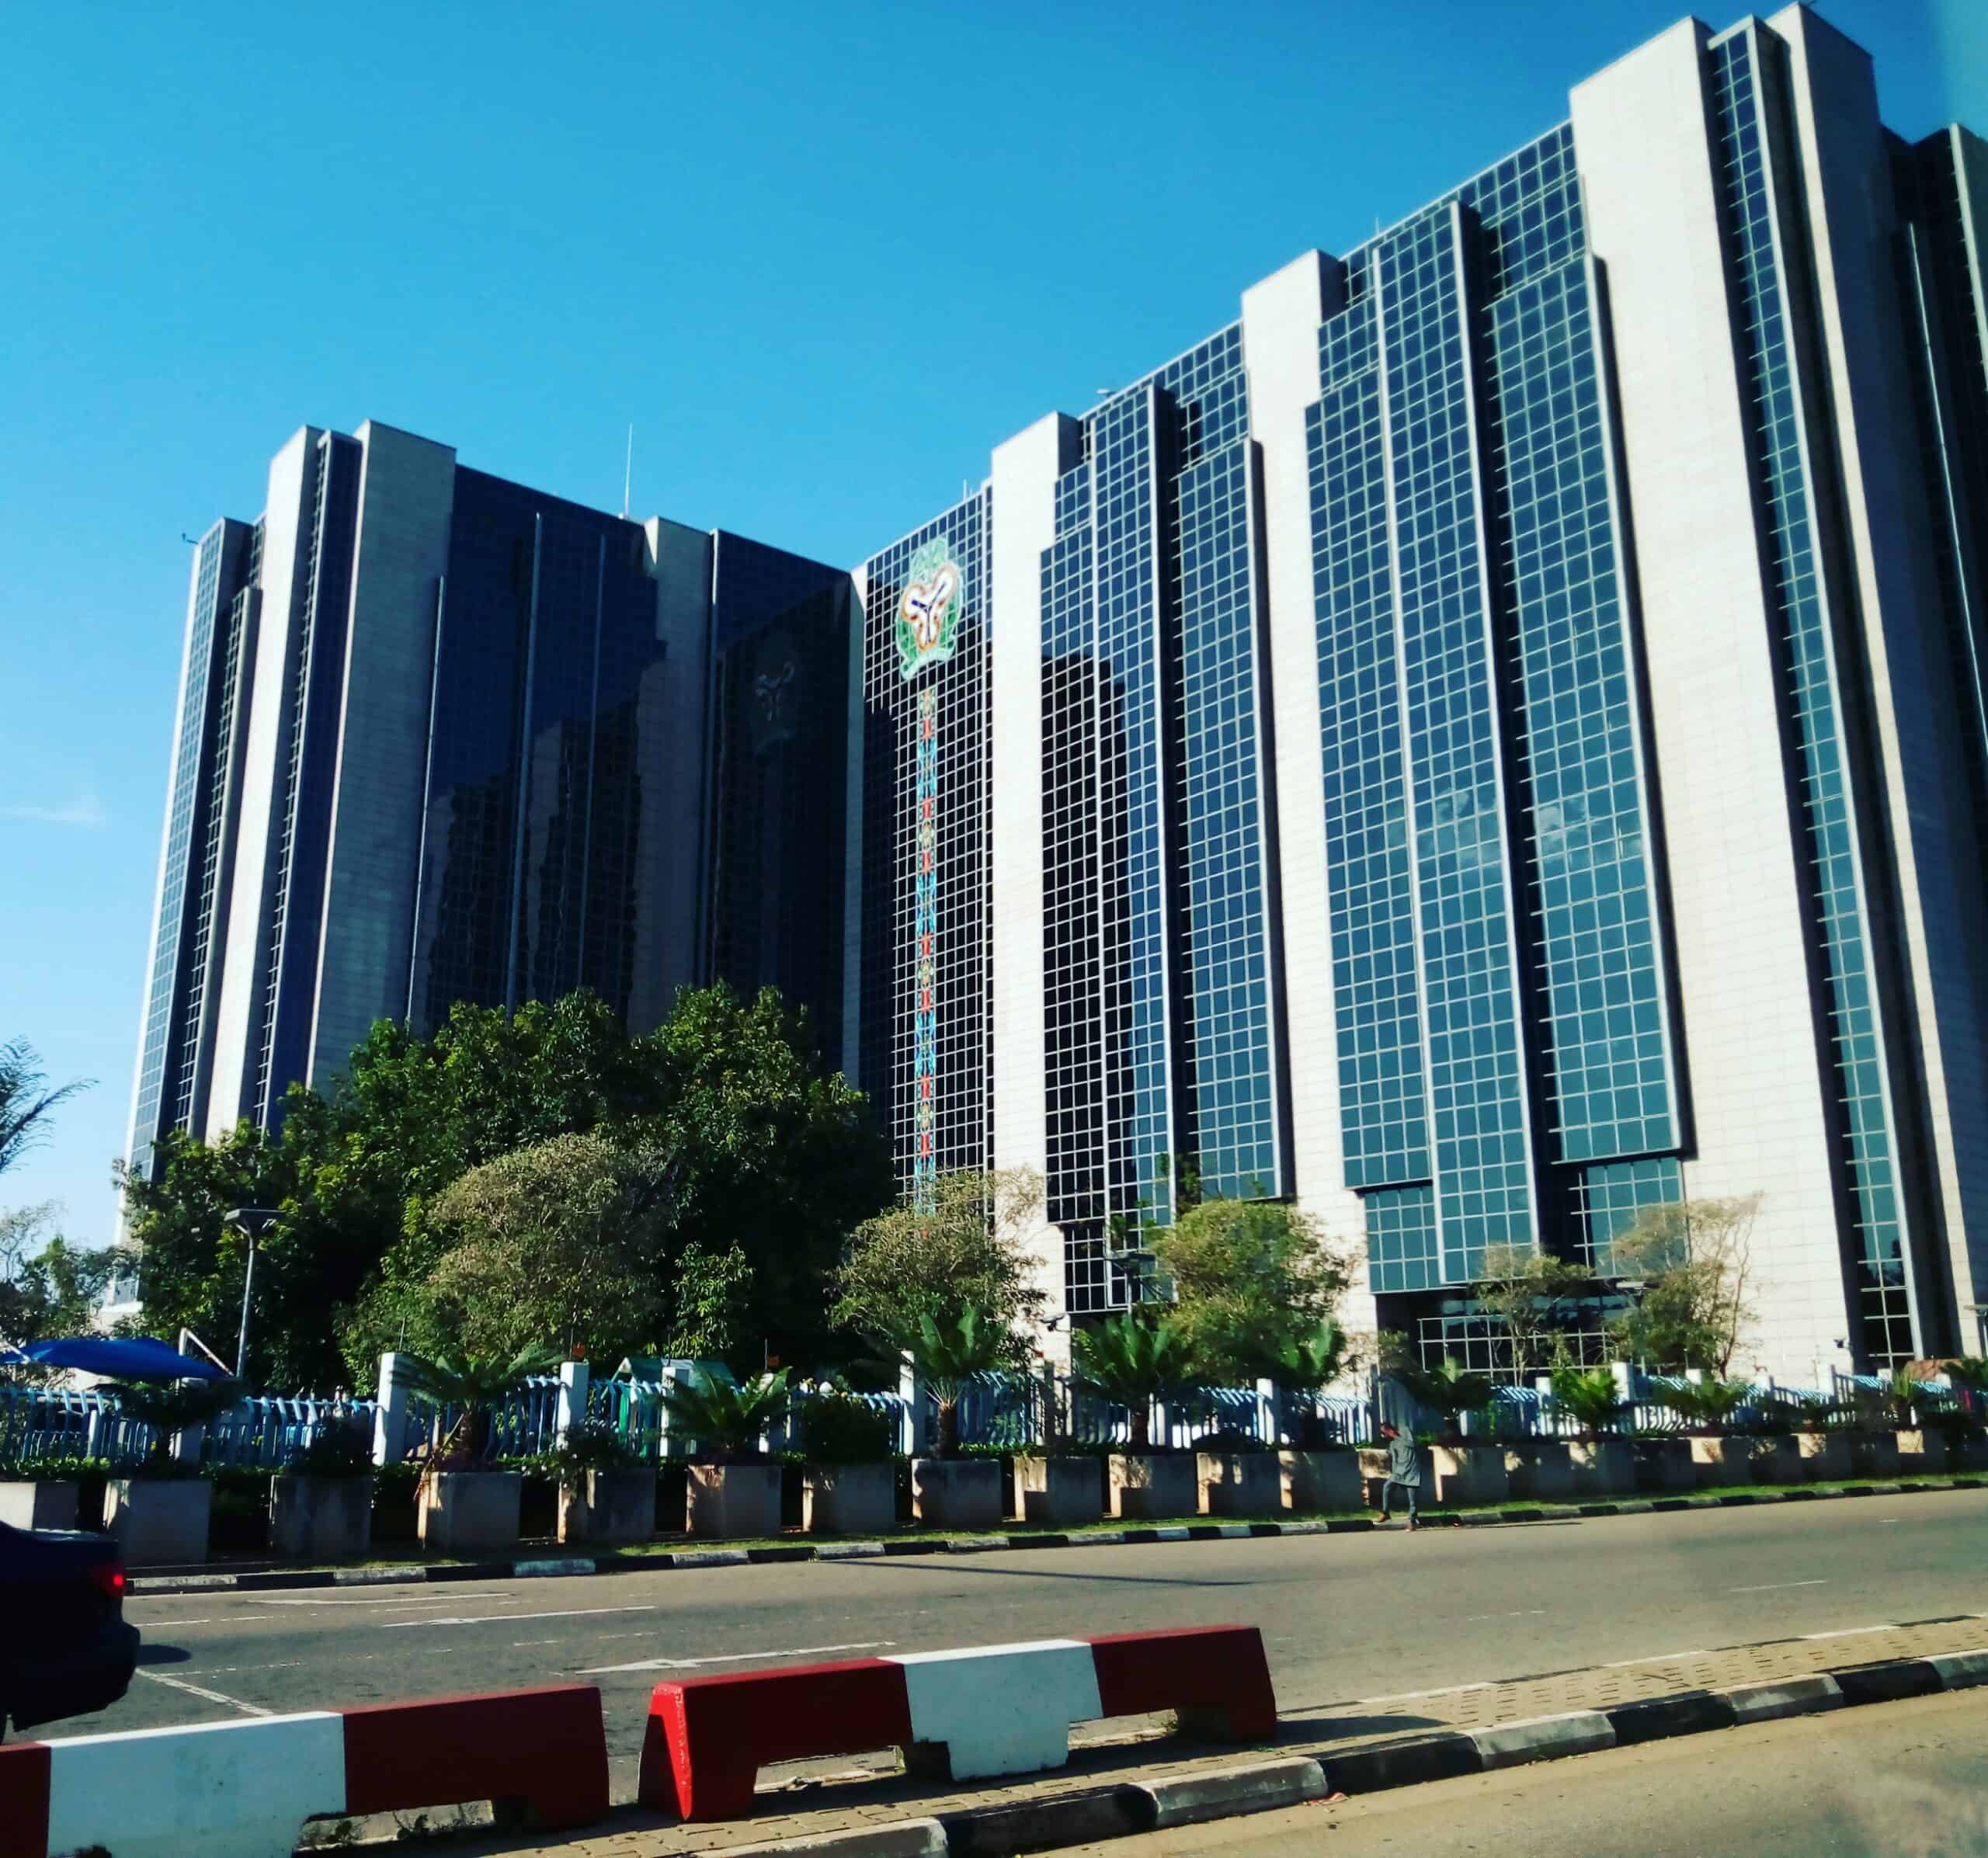 Central bank of Nigeria